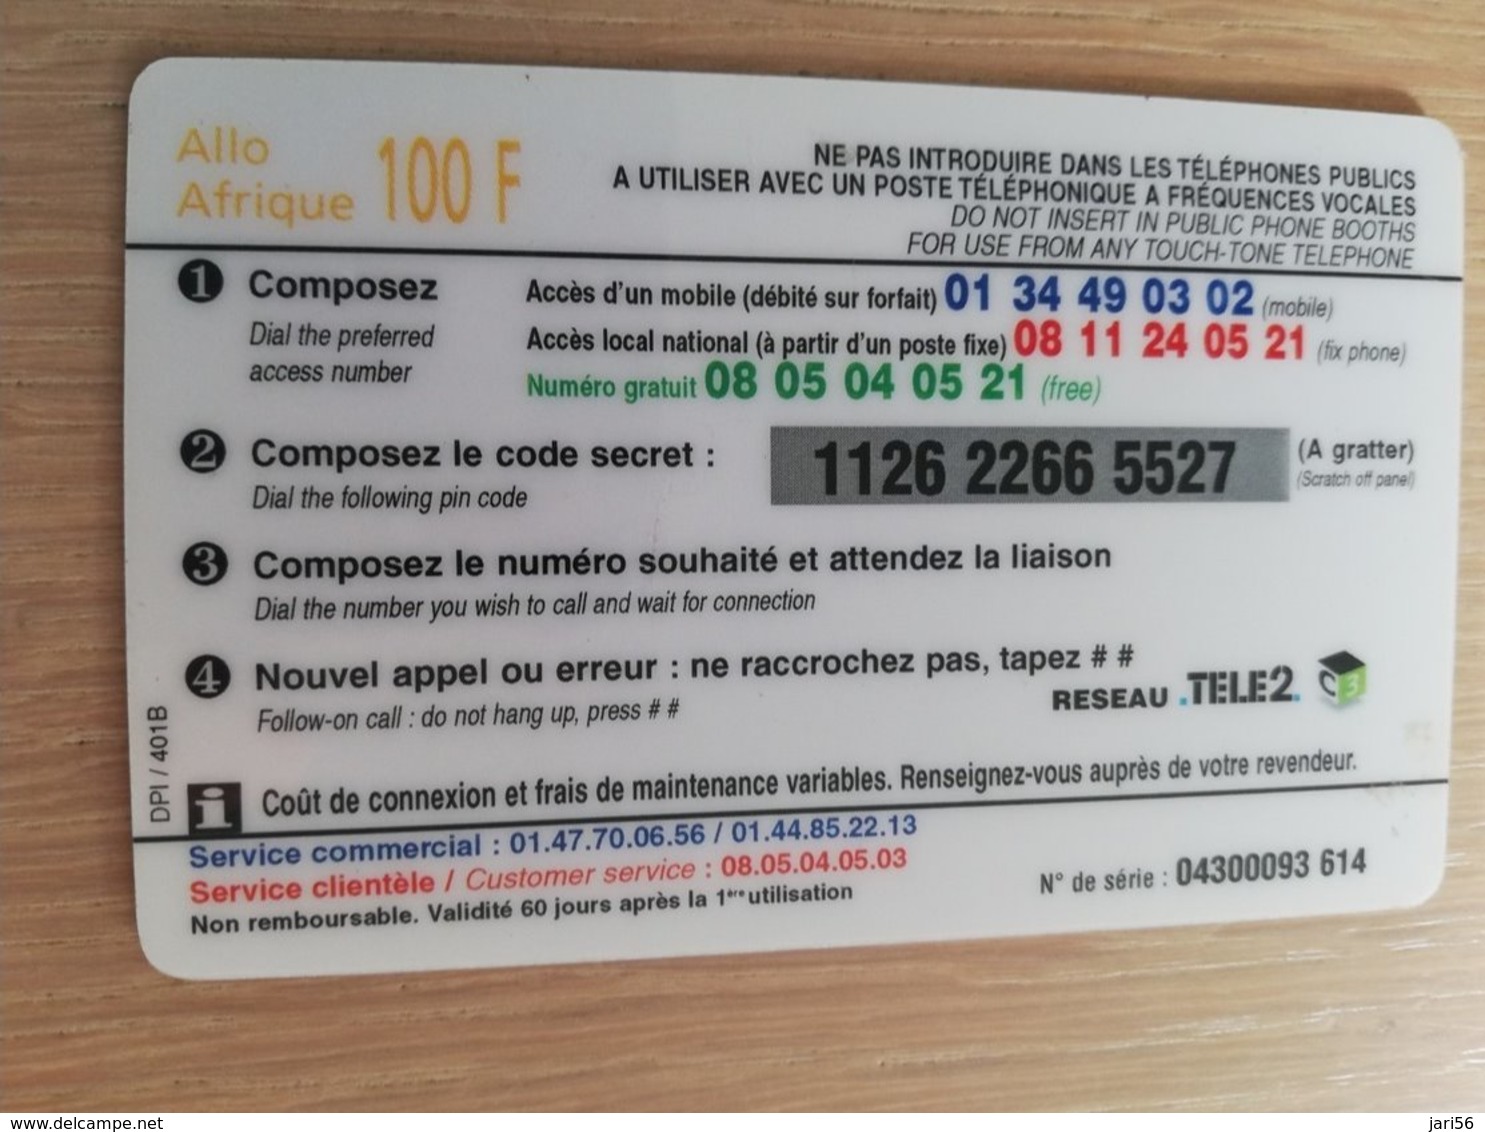 FRANCE/FRANKRIJK  ALLO AFRIQUE 100 FR  PREPAID  USED    ** 1512** - Nachladekarten (Handy/SIM)